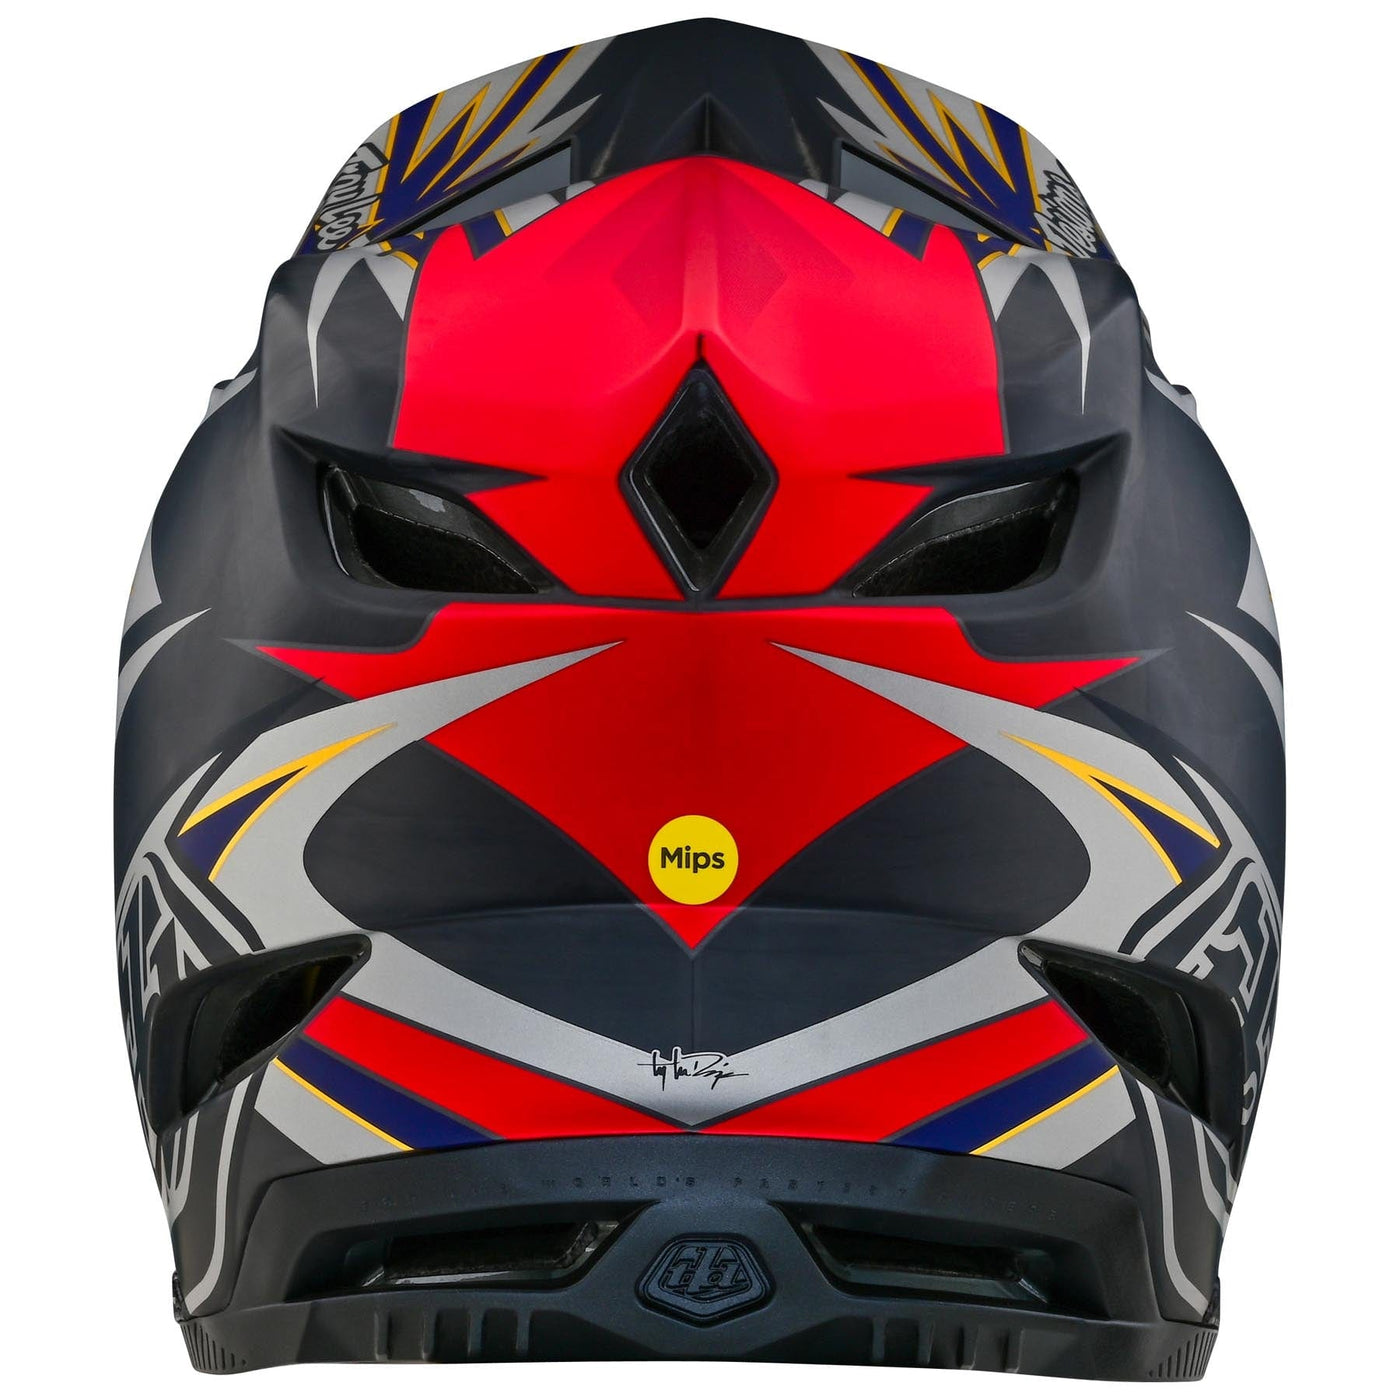 Troy Lee Designs downhill helmet - Gray